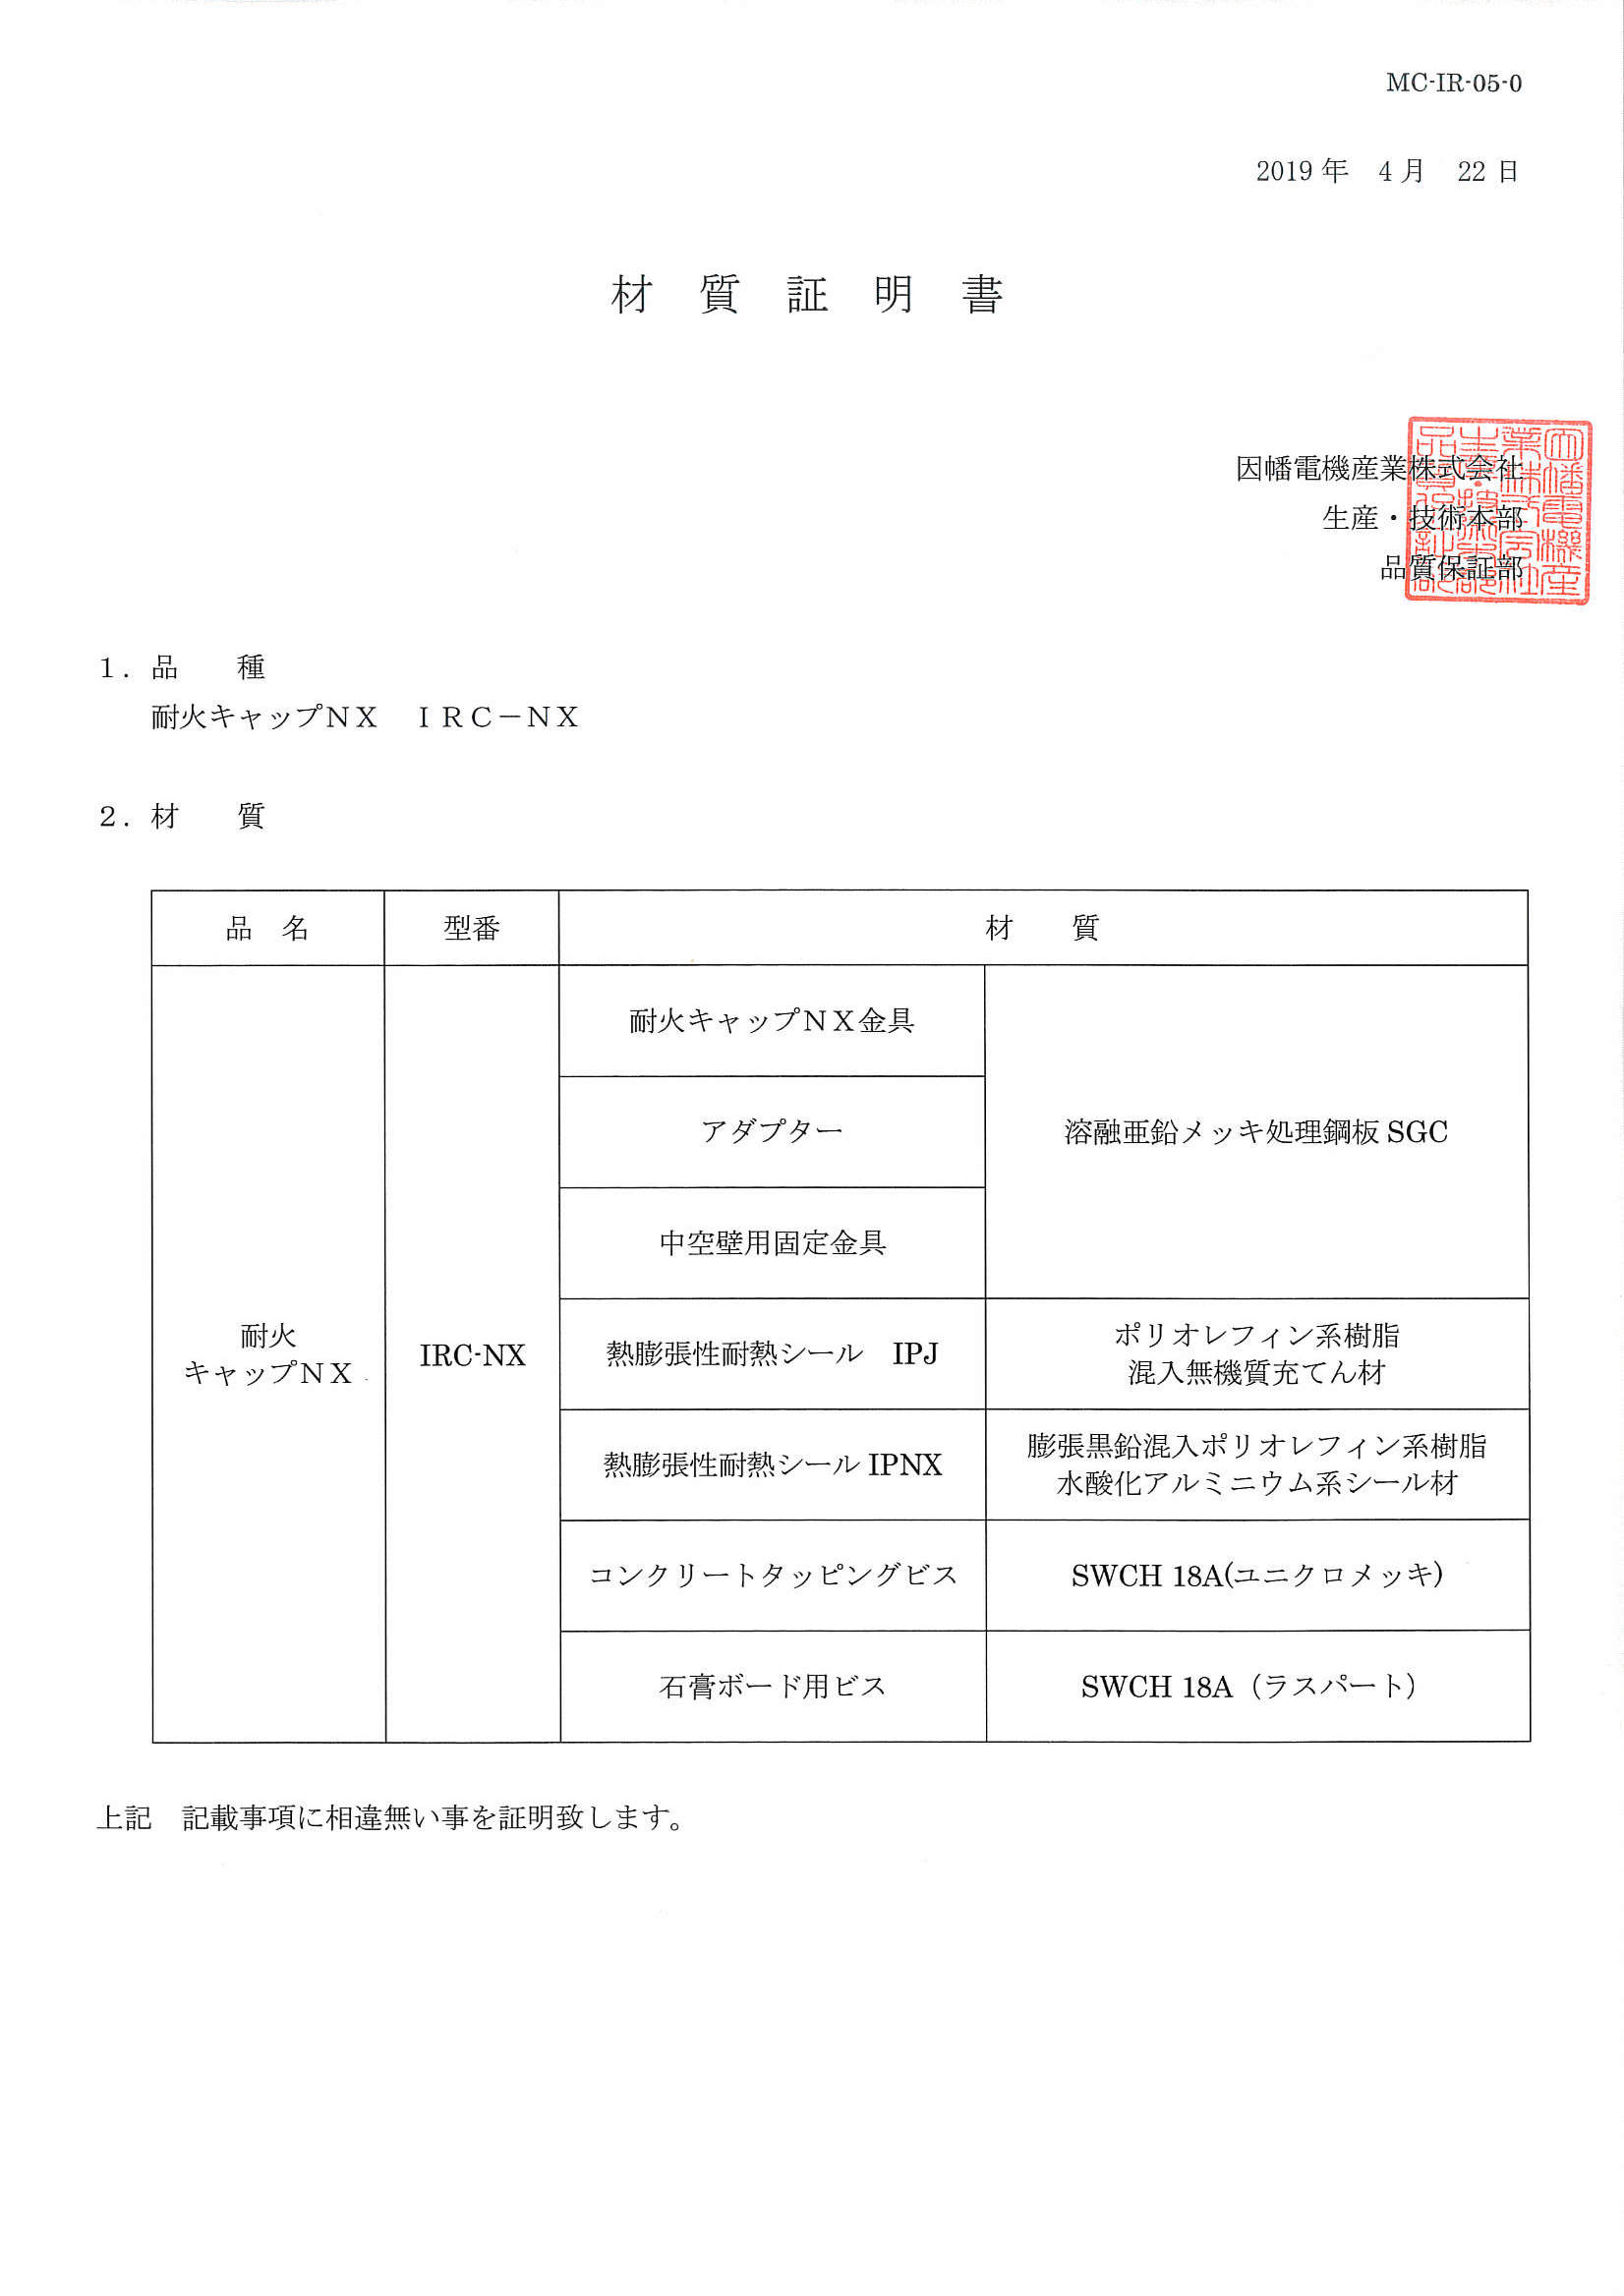 IRC-NX_材質証明書_20190422.pdf